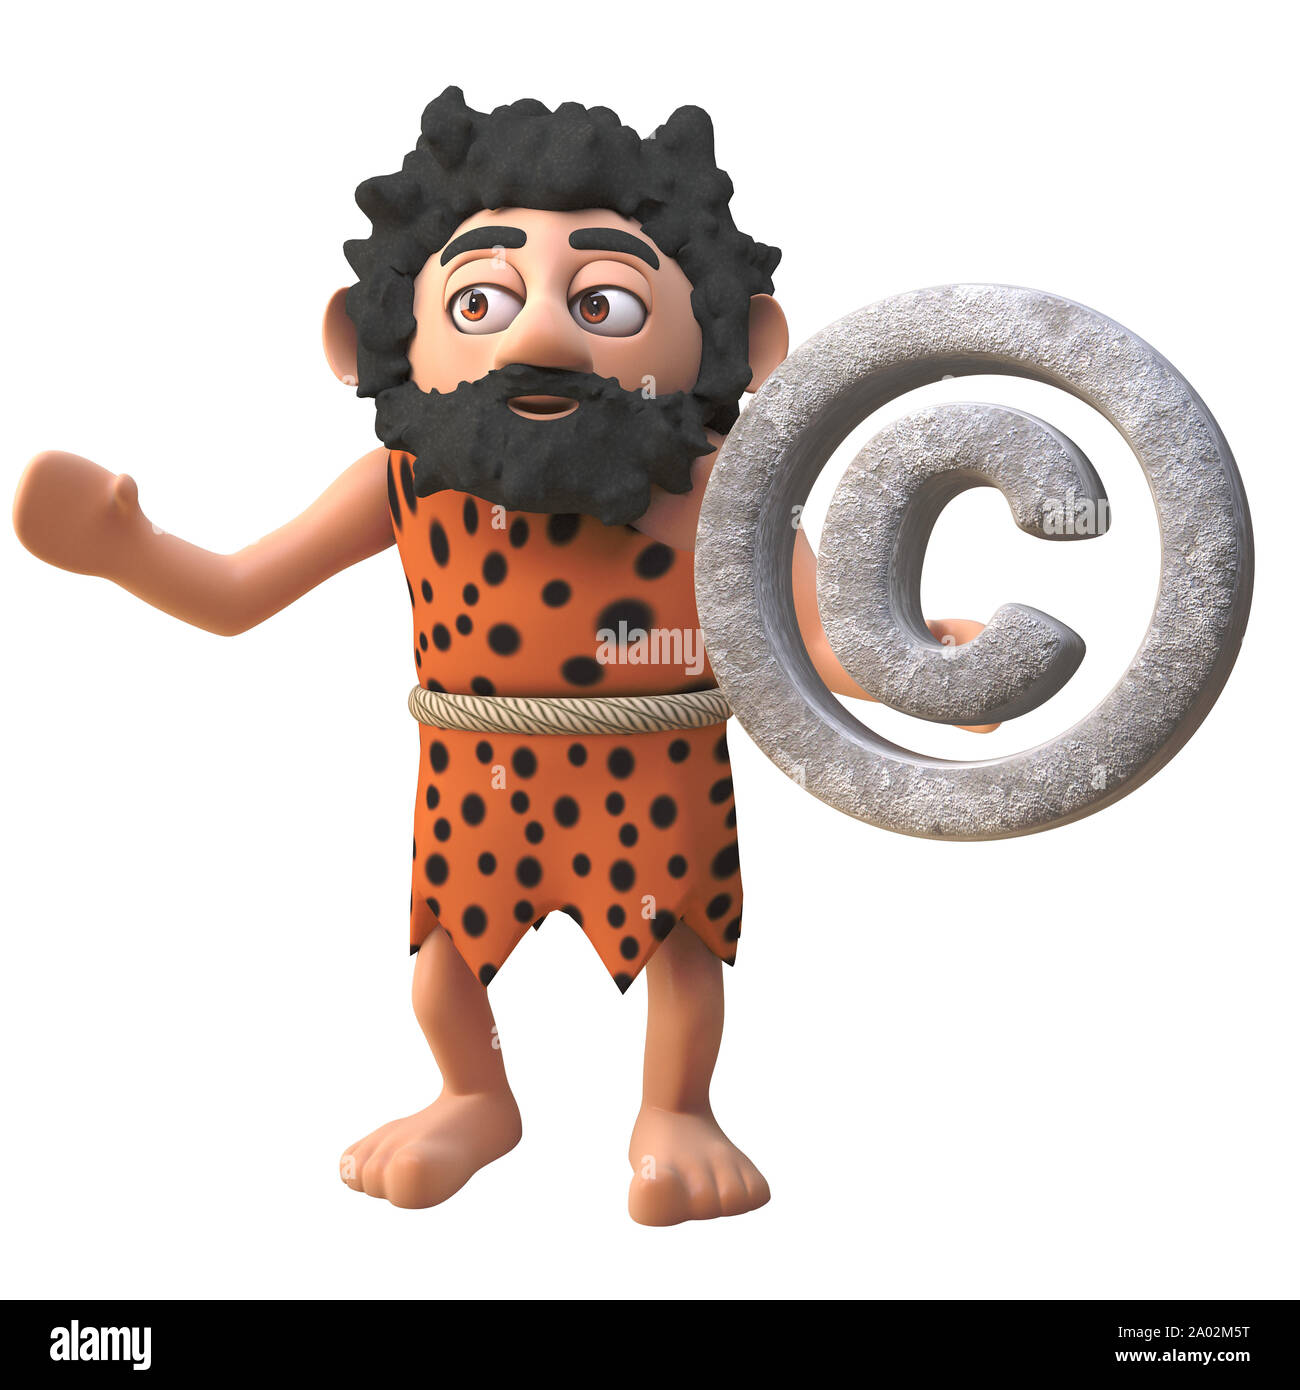 Cartoon 3d prehistoric caveman character holding a rock copyright symbol, 3d illustration render Stock Photo